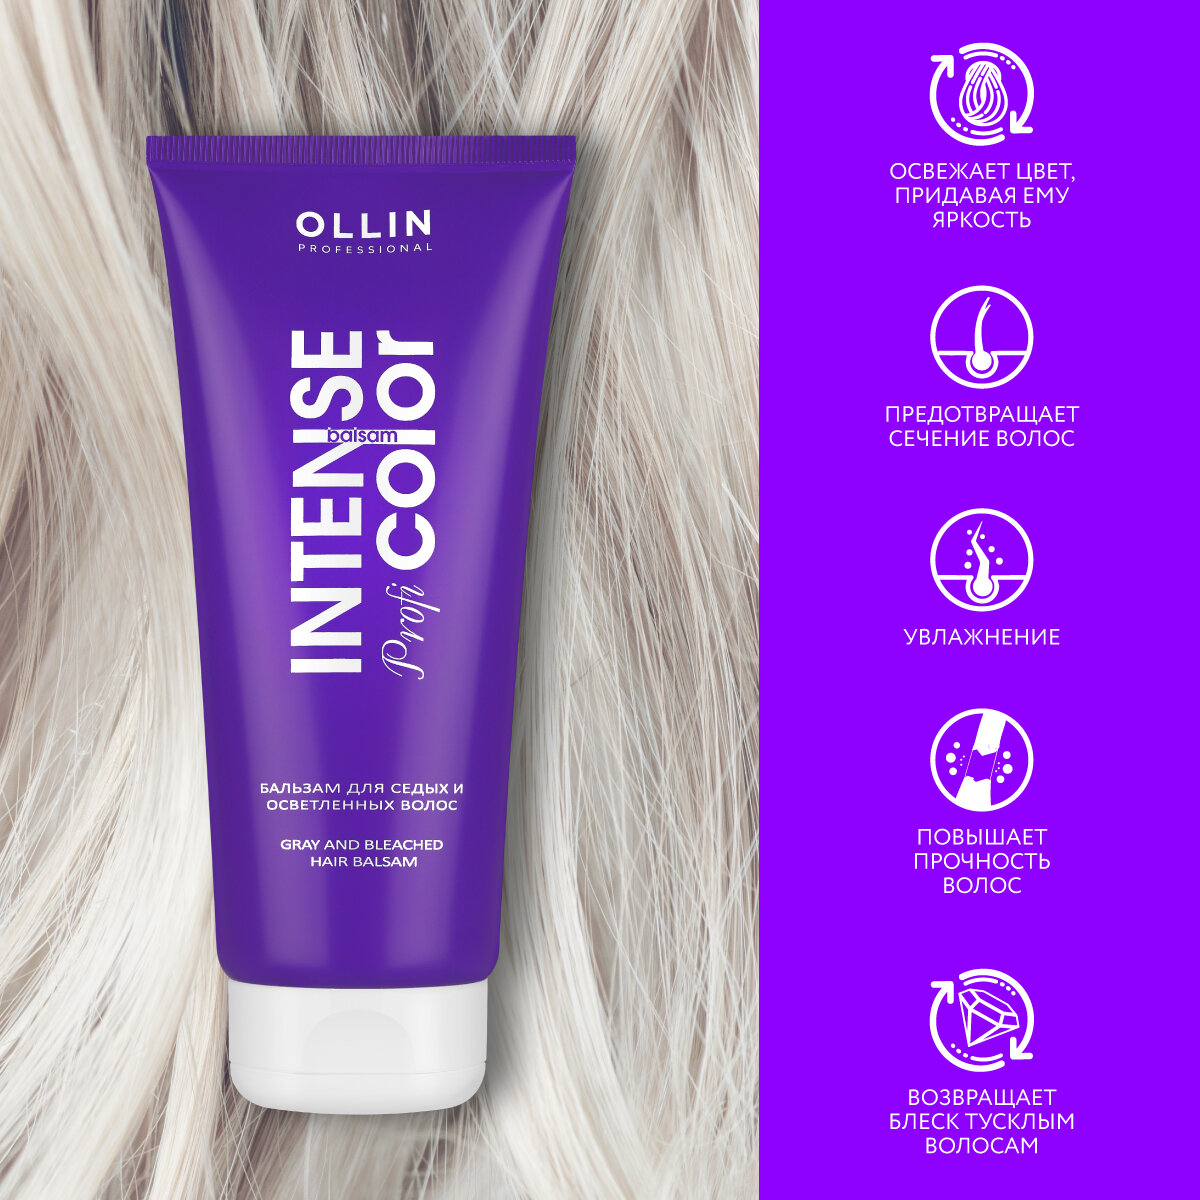 Ollin Professional Бальзам для седых и осветленных волос Gray and bleached hair balsam, 200 мл (Ollin Professional, ) - фото №6